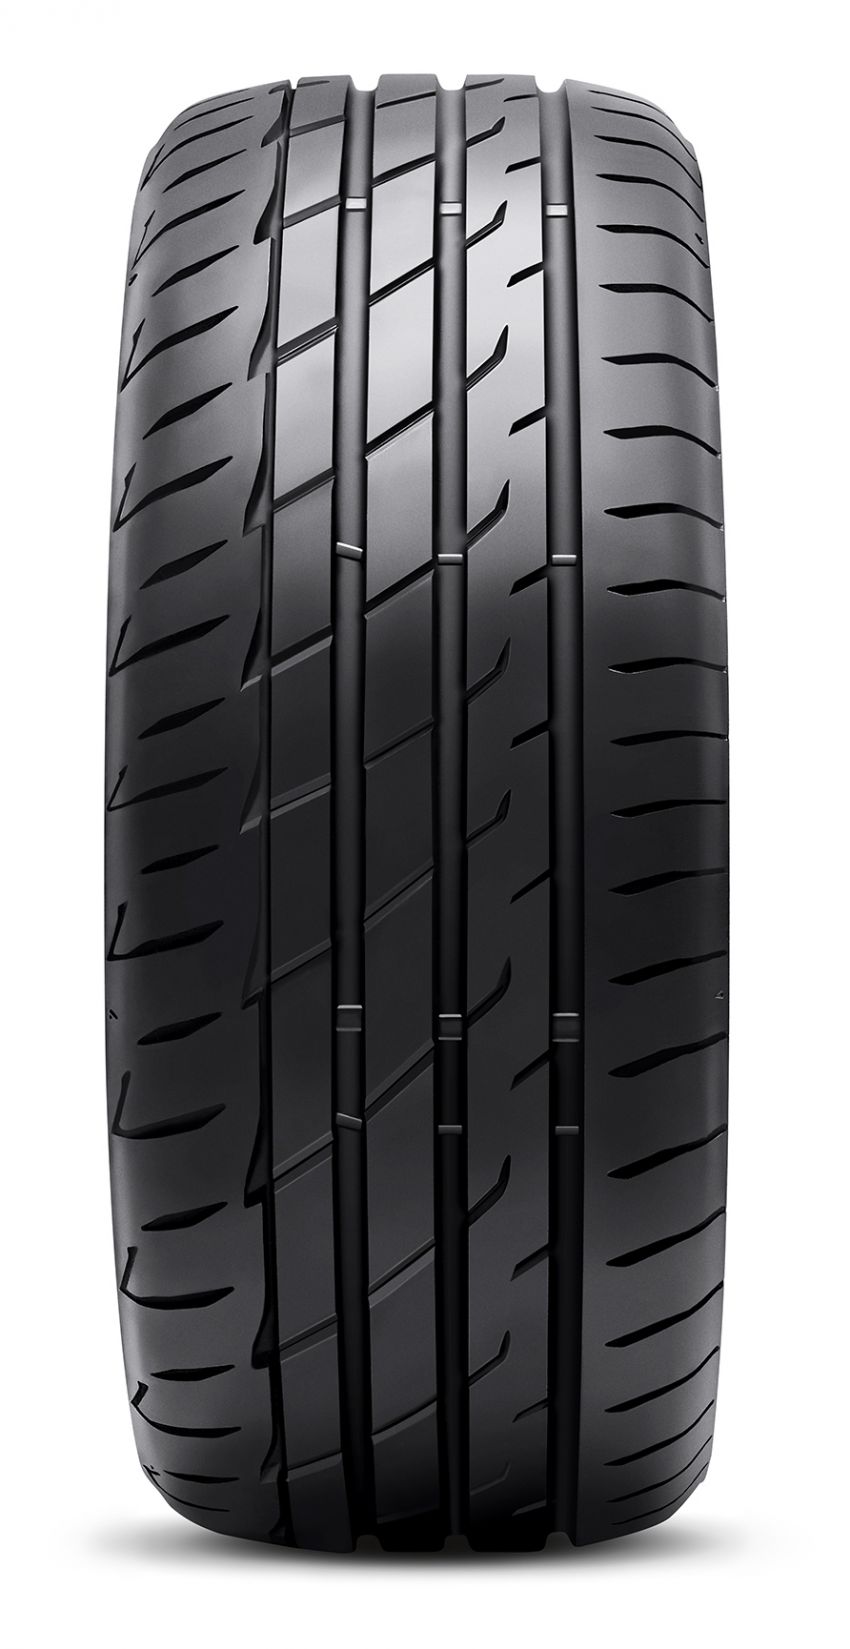 Bridgestone Potenza Adrenalin RE004 tyre now in Malaysia – 15-17 inch sizes, replaces popular RE003 1121071